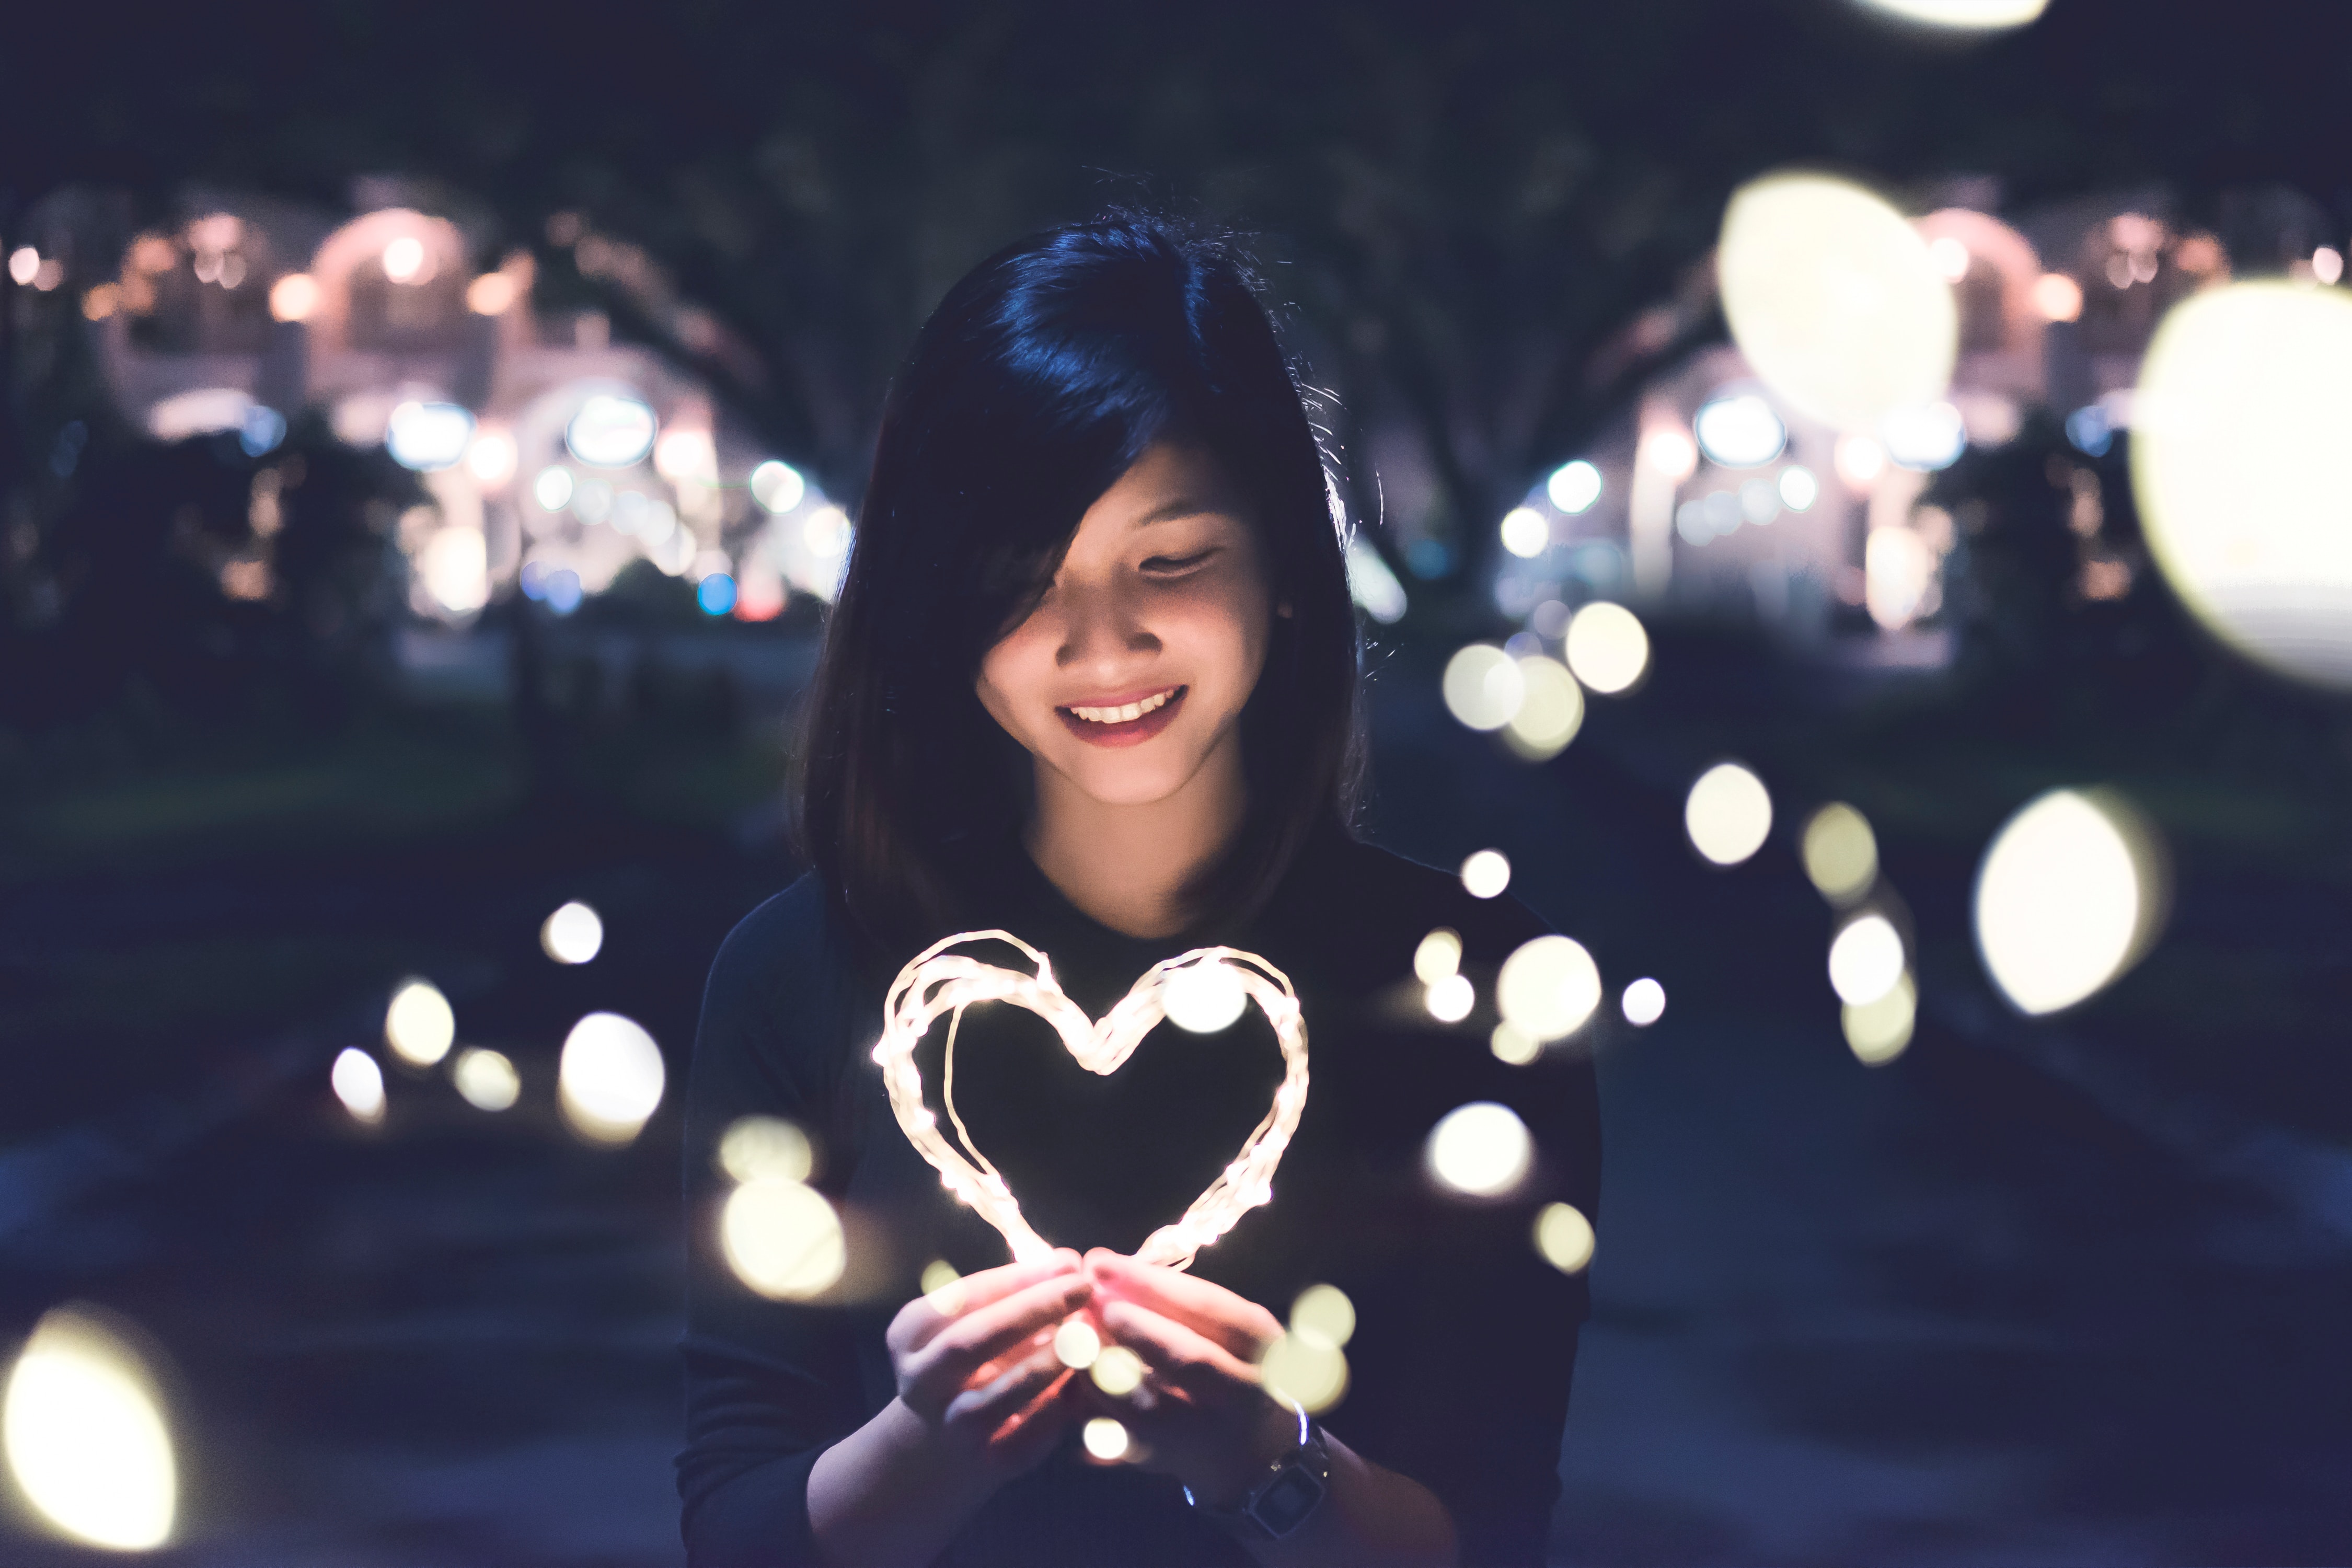 A woman holding a shining heart. | Source: Unsplash